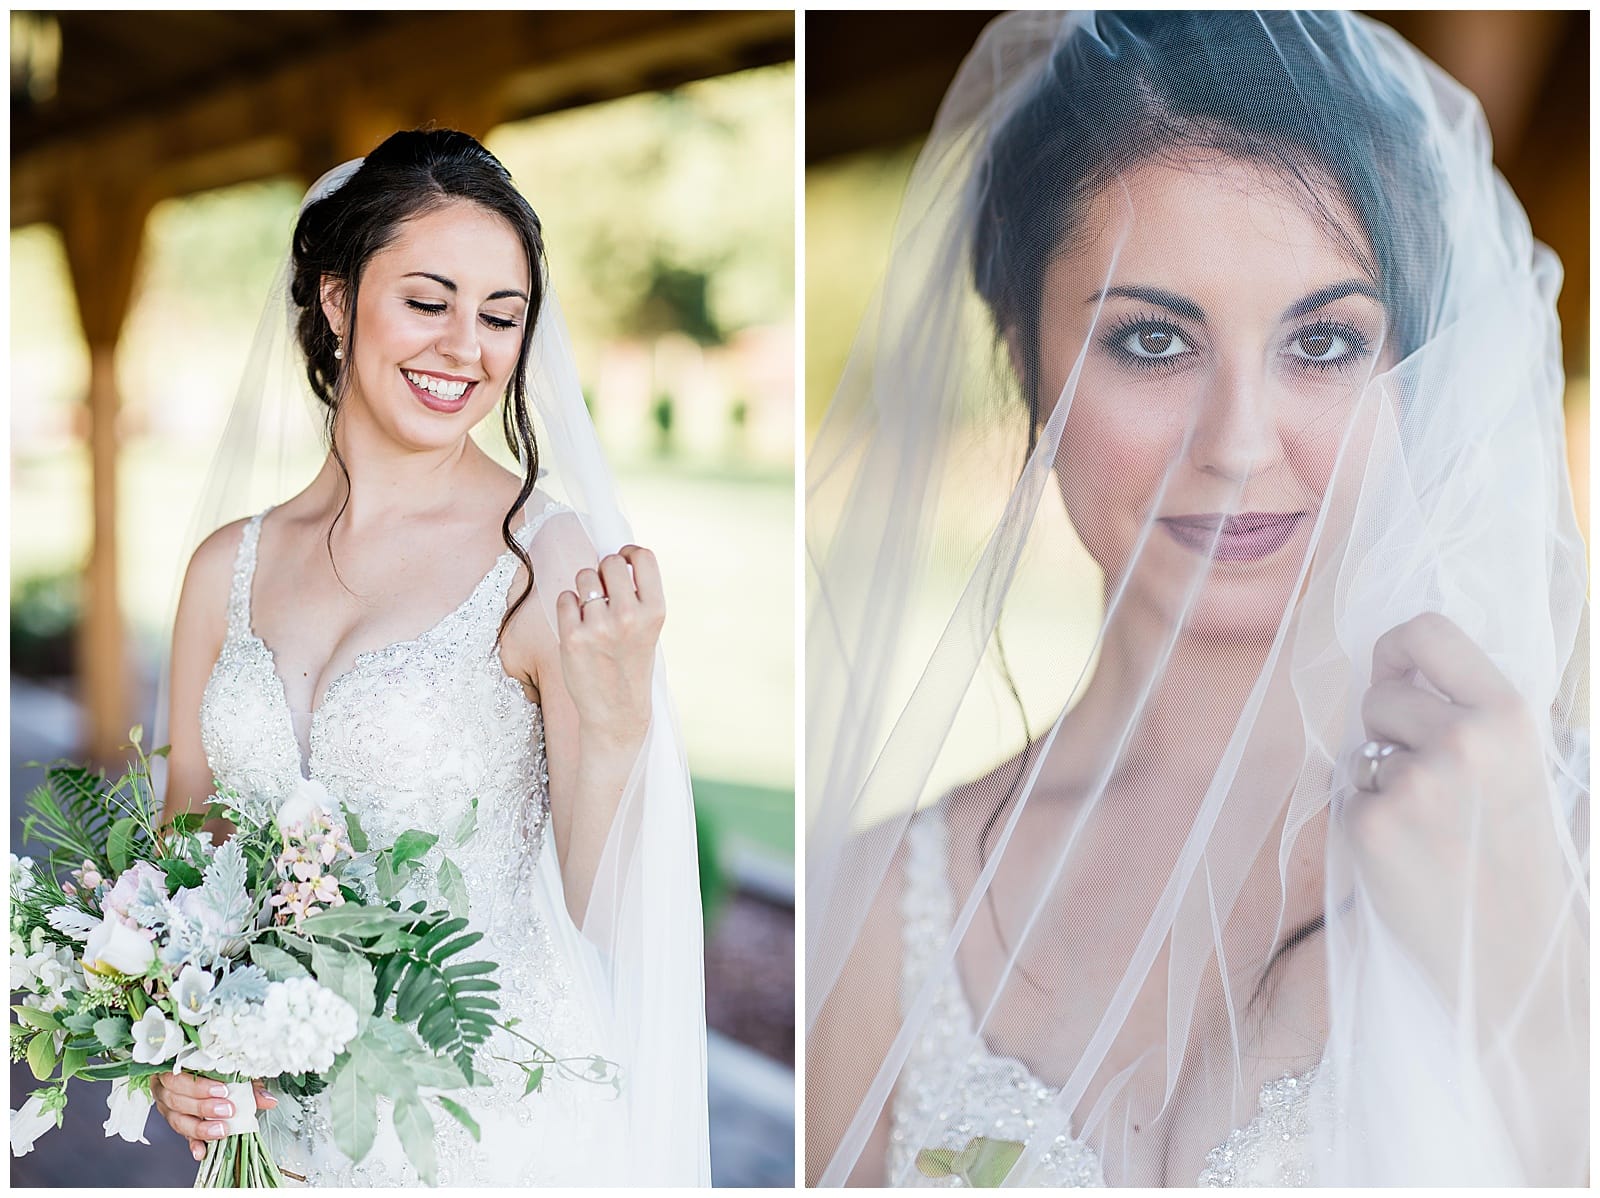 Danielle-Defayette-Photography-Middle-Fork-Barn-Abingdon-Wedding-2020_0006.jpg